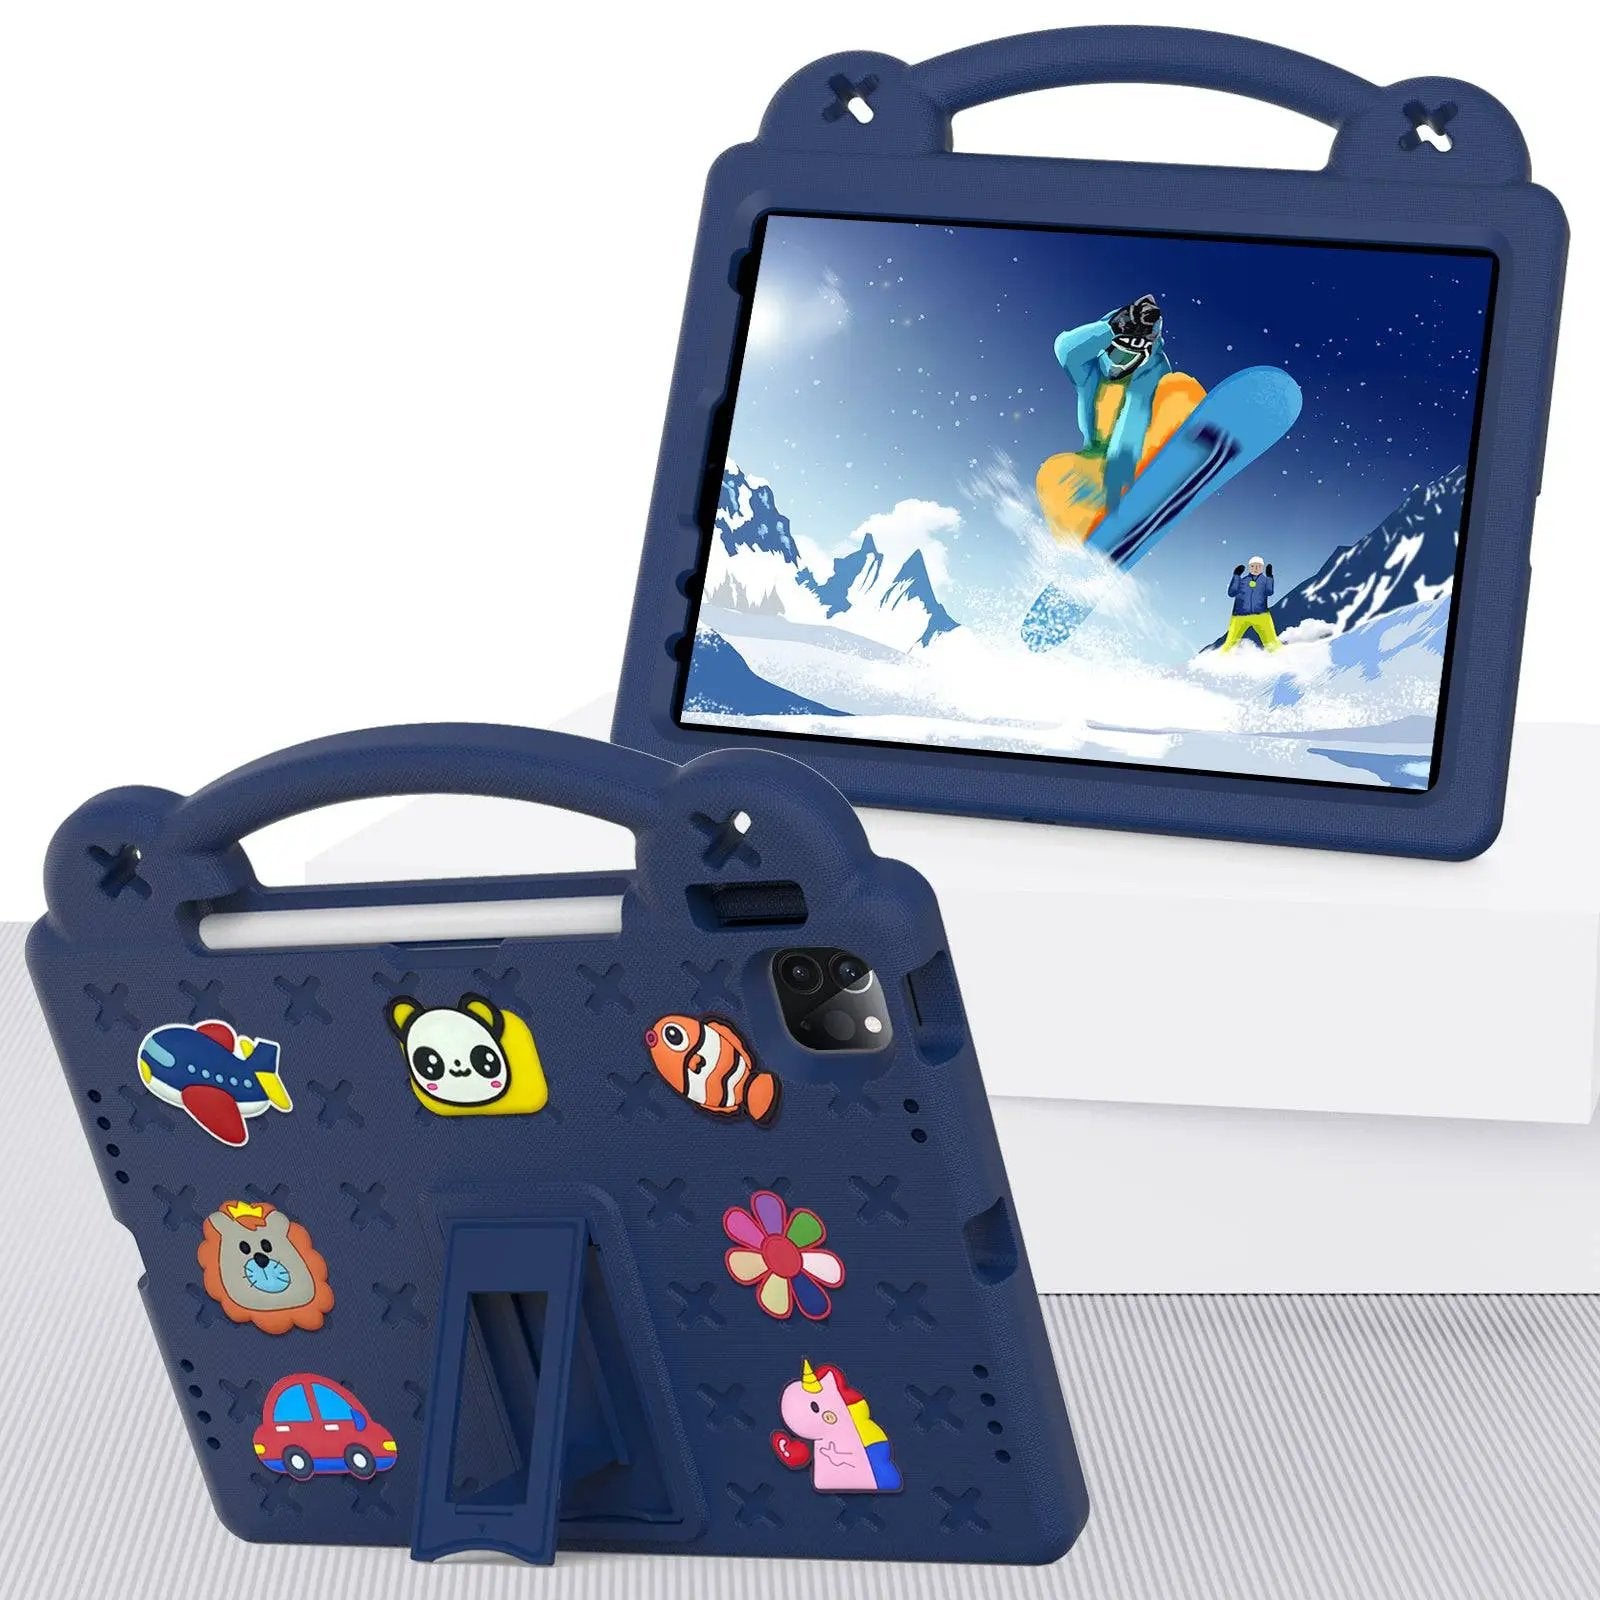 Handle Kids iPad Pro/iPad Air 4/5 Protective Case - Hugmie